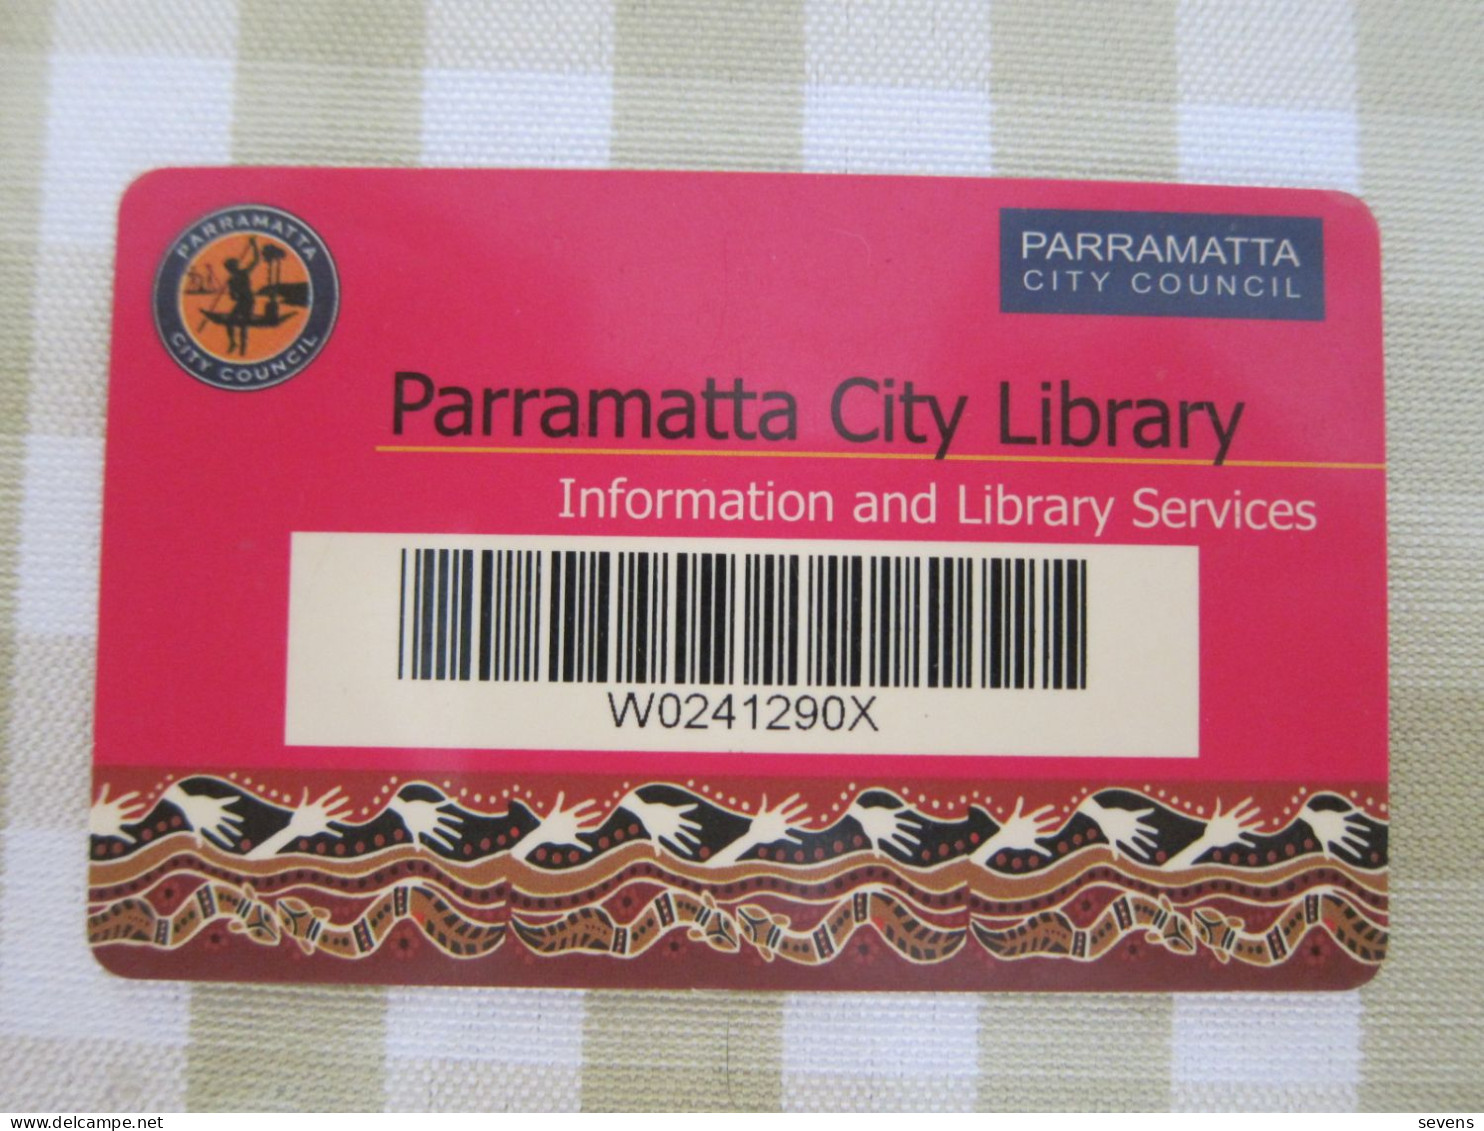 Parramatta(Sydney) City Library Card - Non Classés